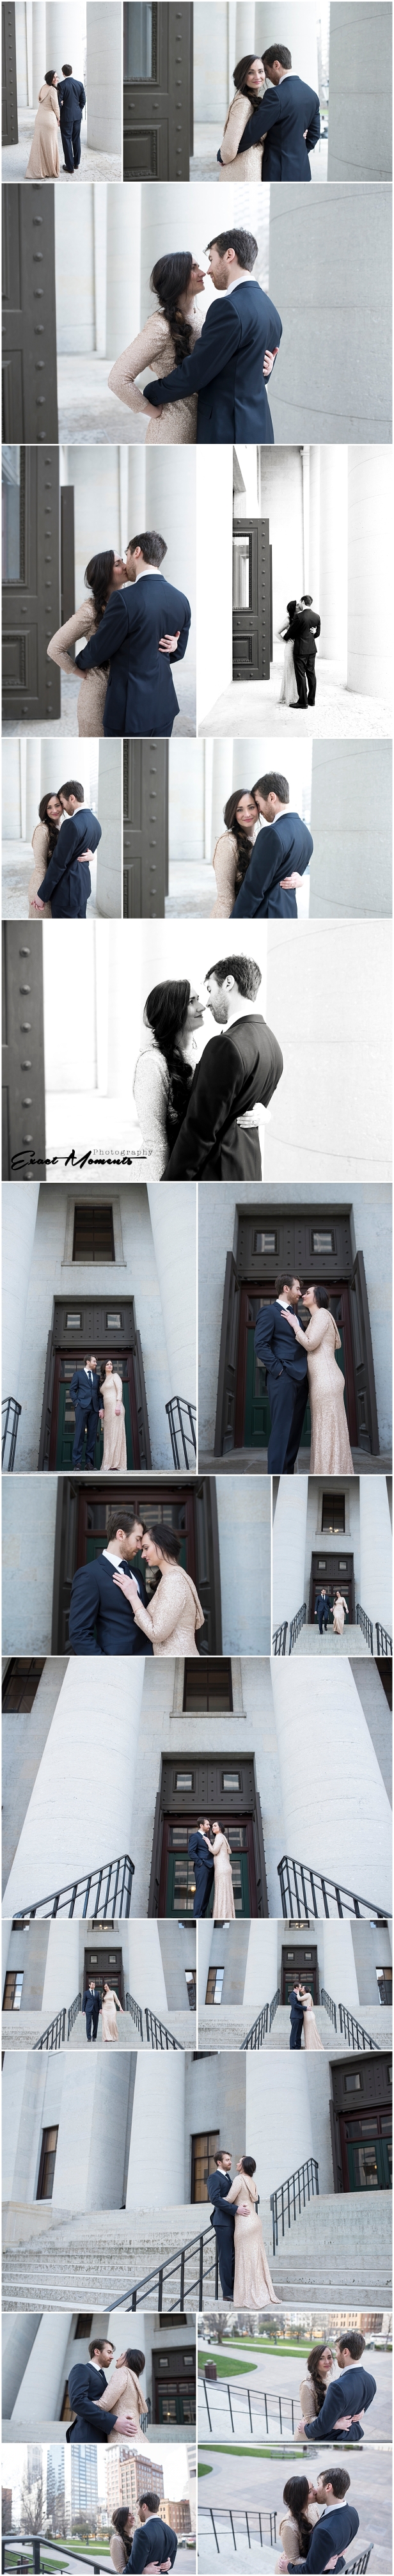 Ohio Statehouse Bride and Groom Photos